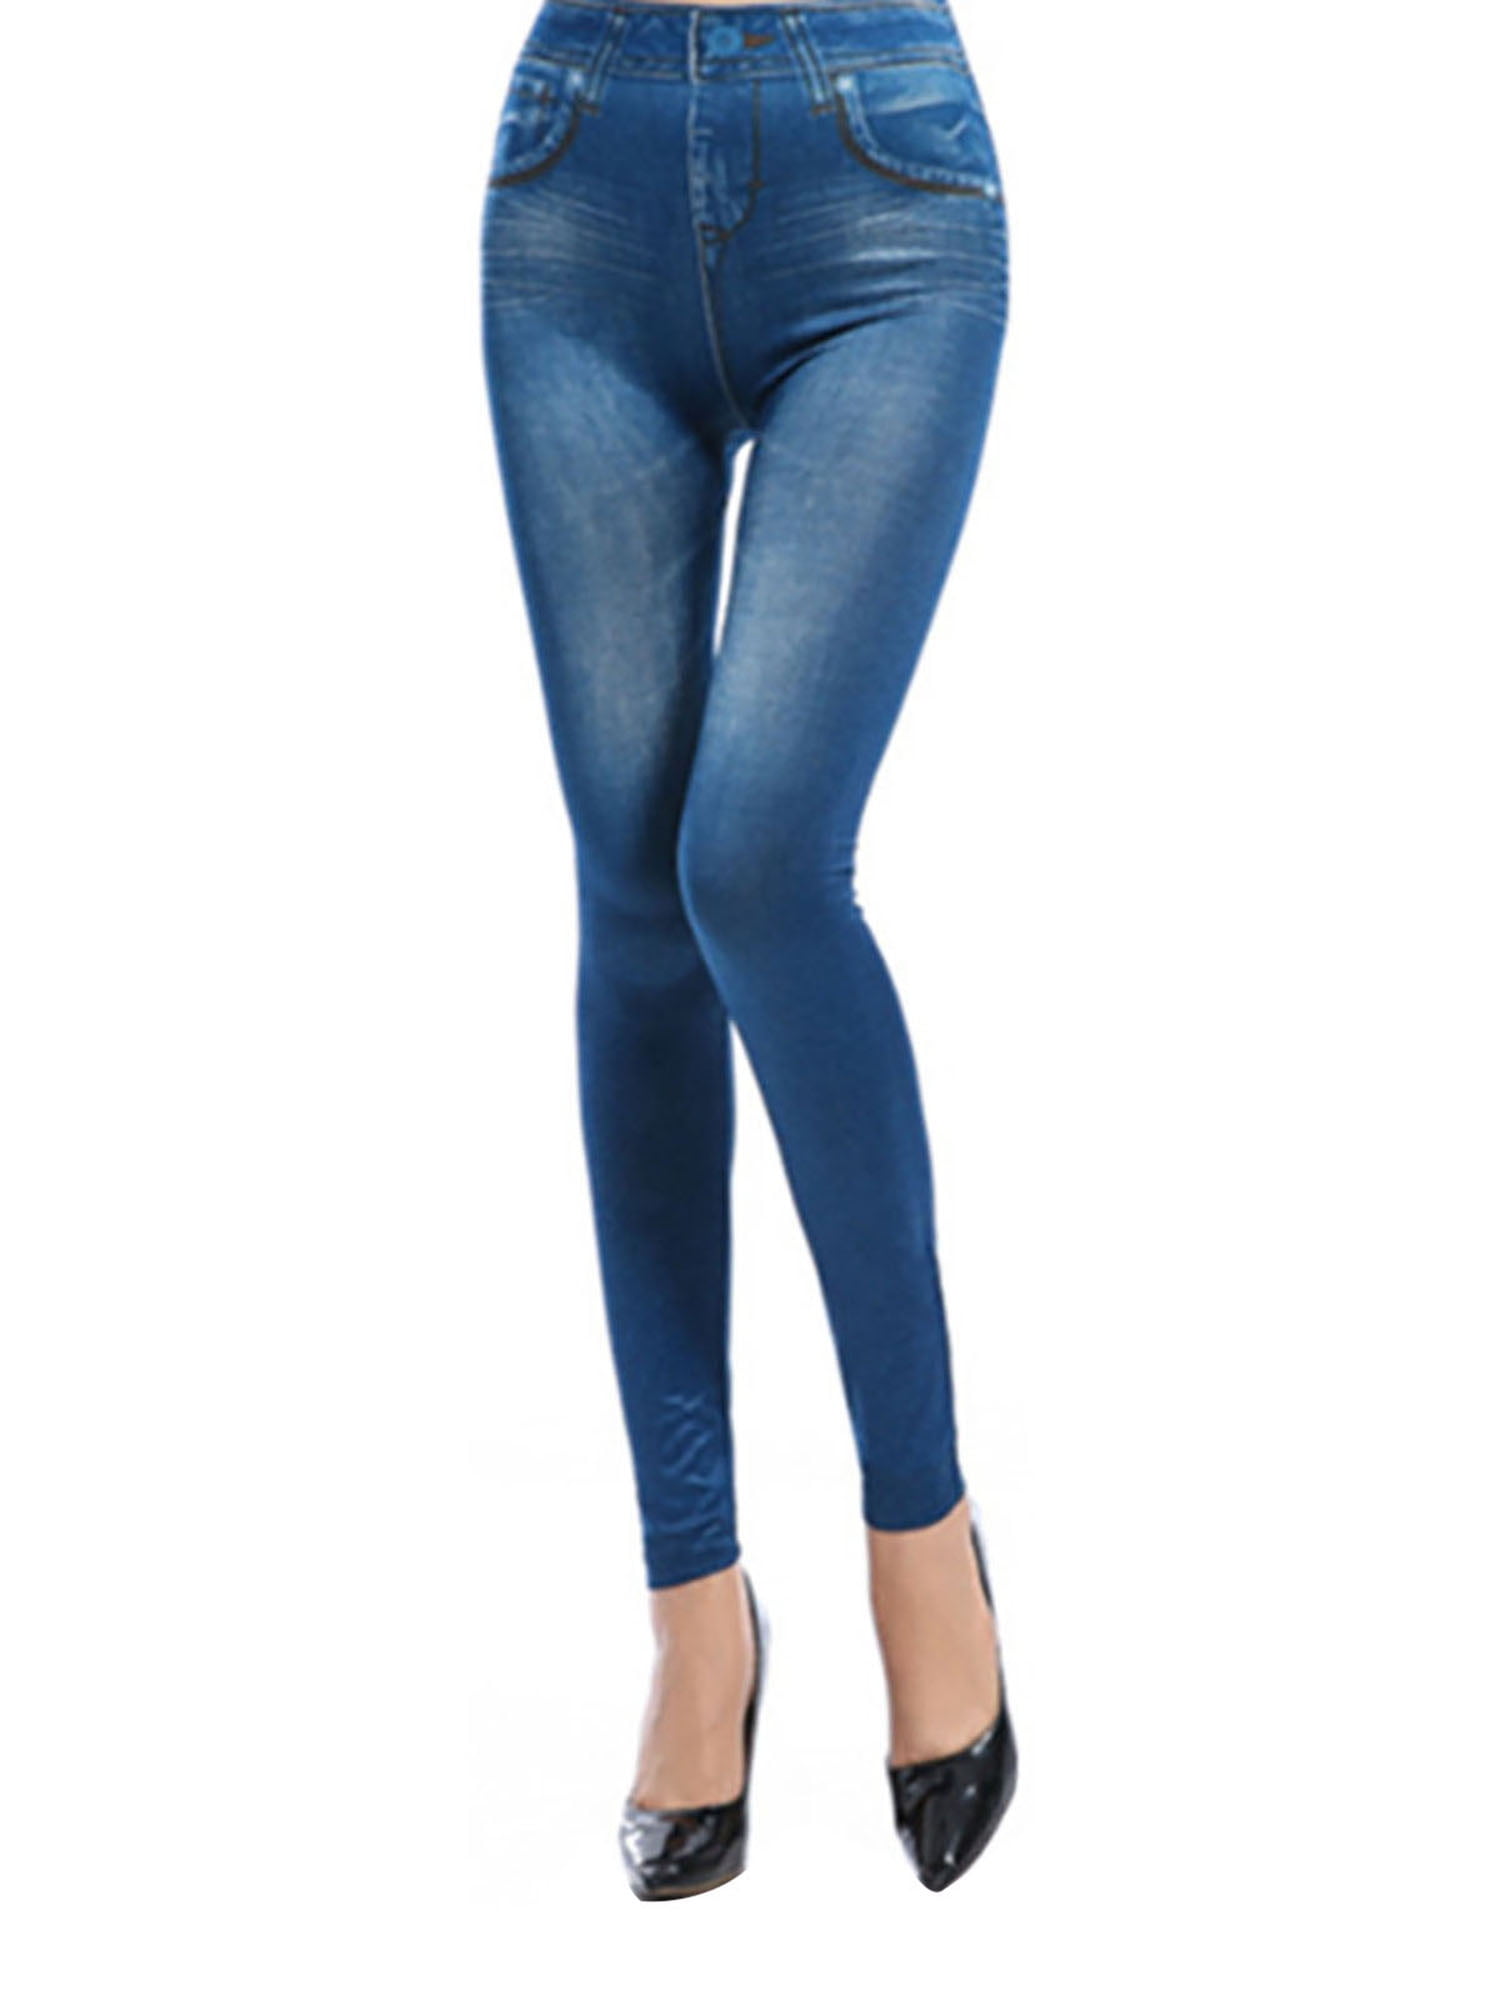 Women Stretchy Jegging Jeans High Waist Push Up Imitation Denim Leggings  Pants Straight Long Pencil Pants